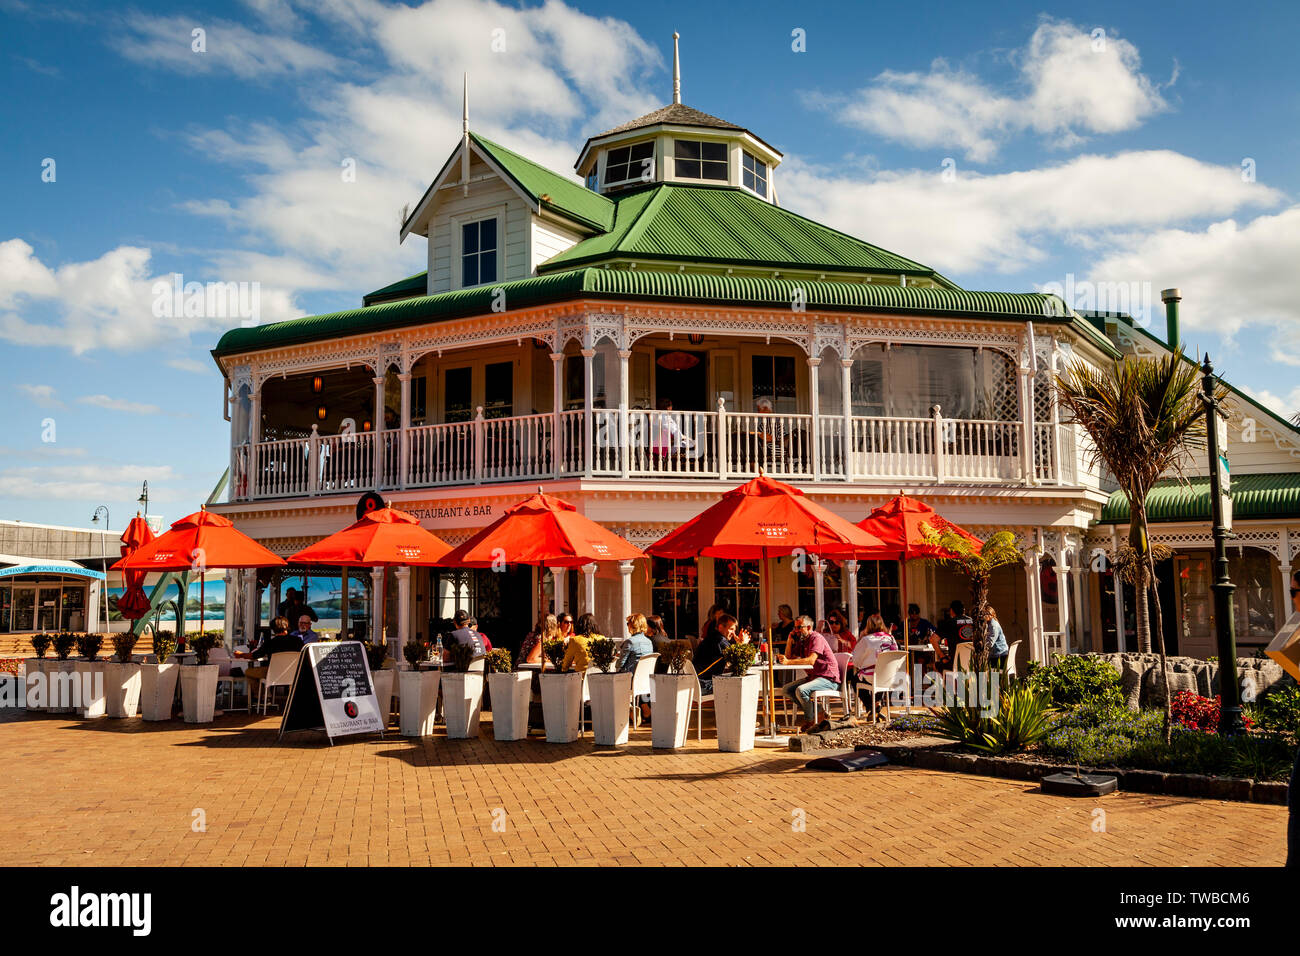 No 8 Restaurant, Town Basin, Whangarei, North Island, New Zealand Stock Photo